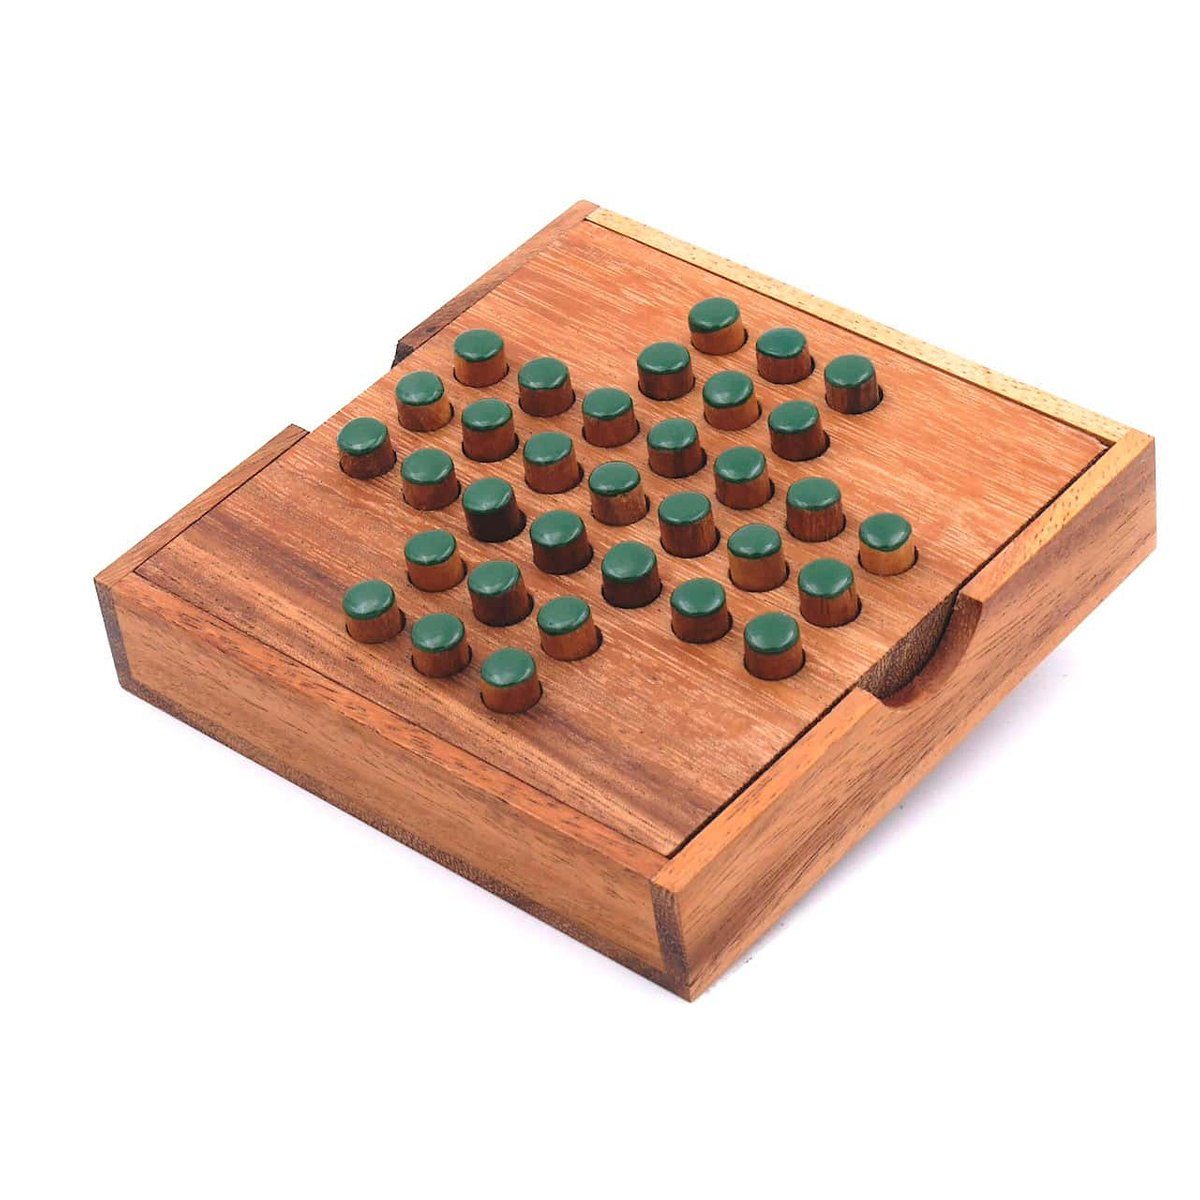 Solitaire - Denkspiele ROMBOL Holz, Klassiker aus edlem Spiel, grün unterhaltsamer Steckspiel Holzspiel